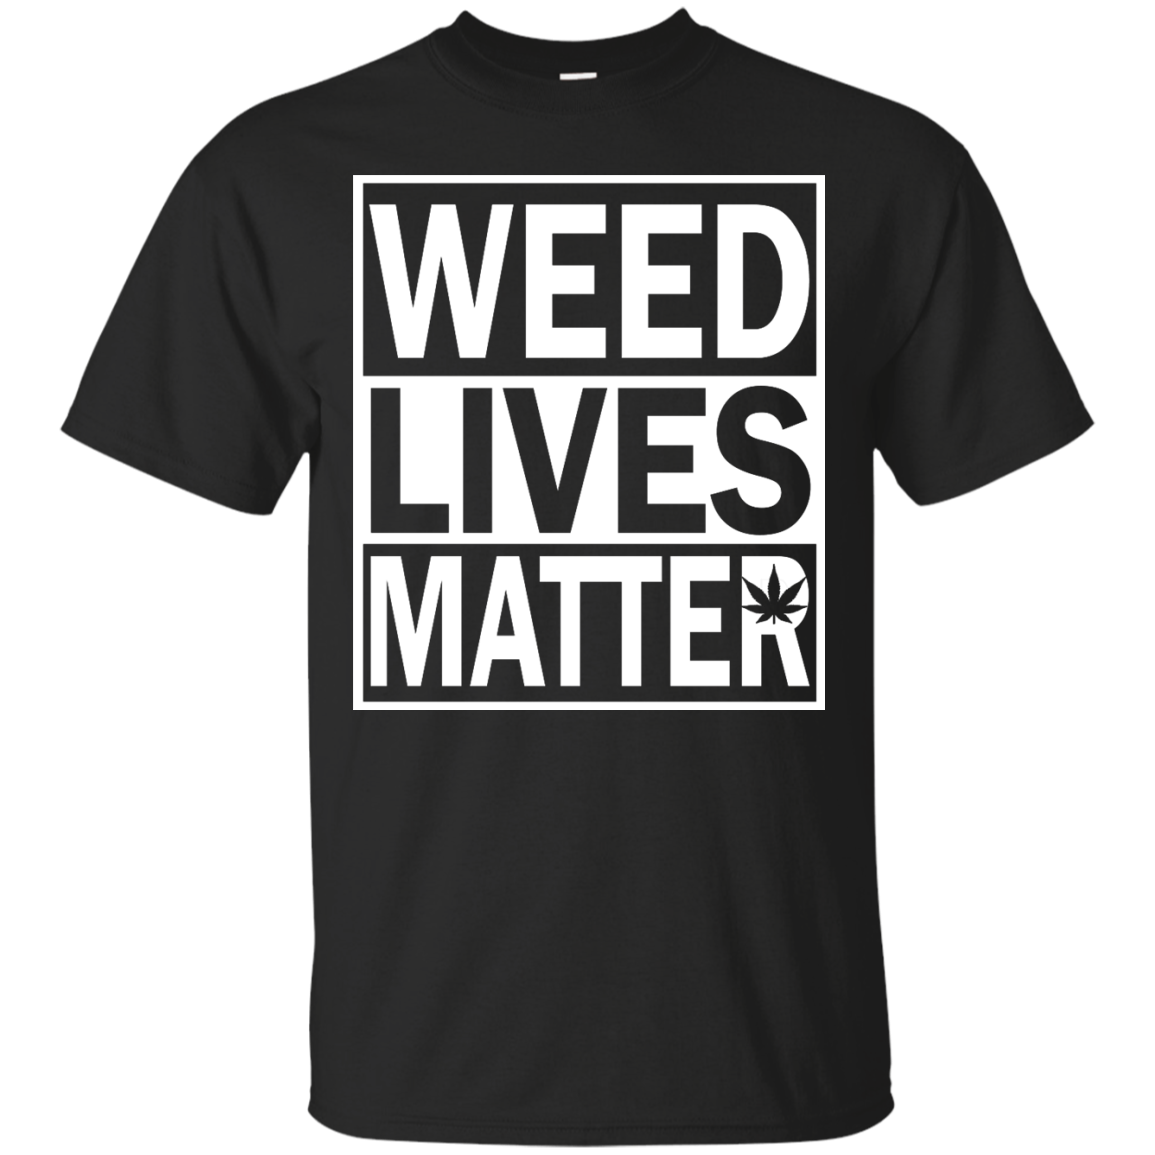 Weed lives matter t-shirt, long sleeve